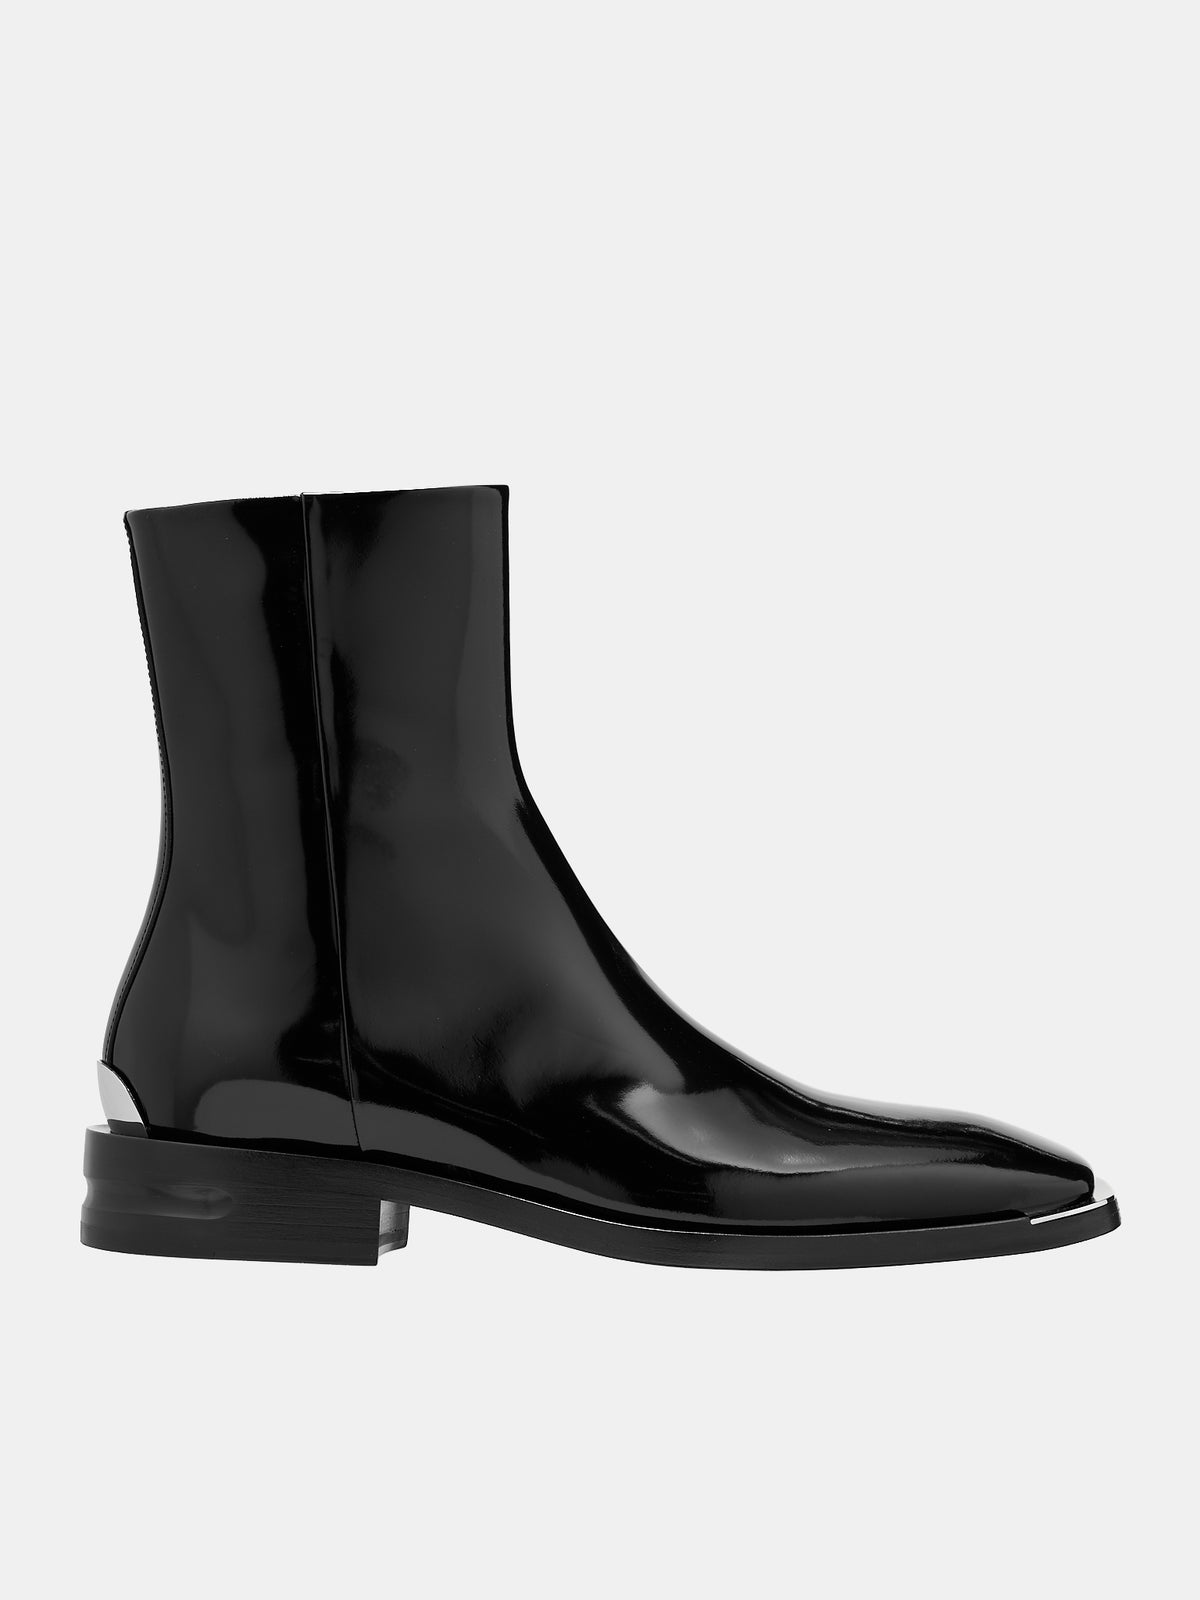 Patent Leather Boots (M2020-287-ABBRASIVATO-NERO)